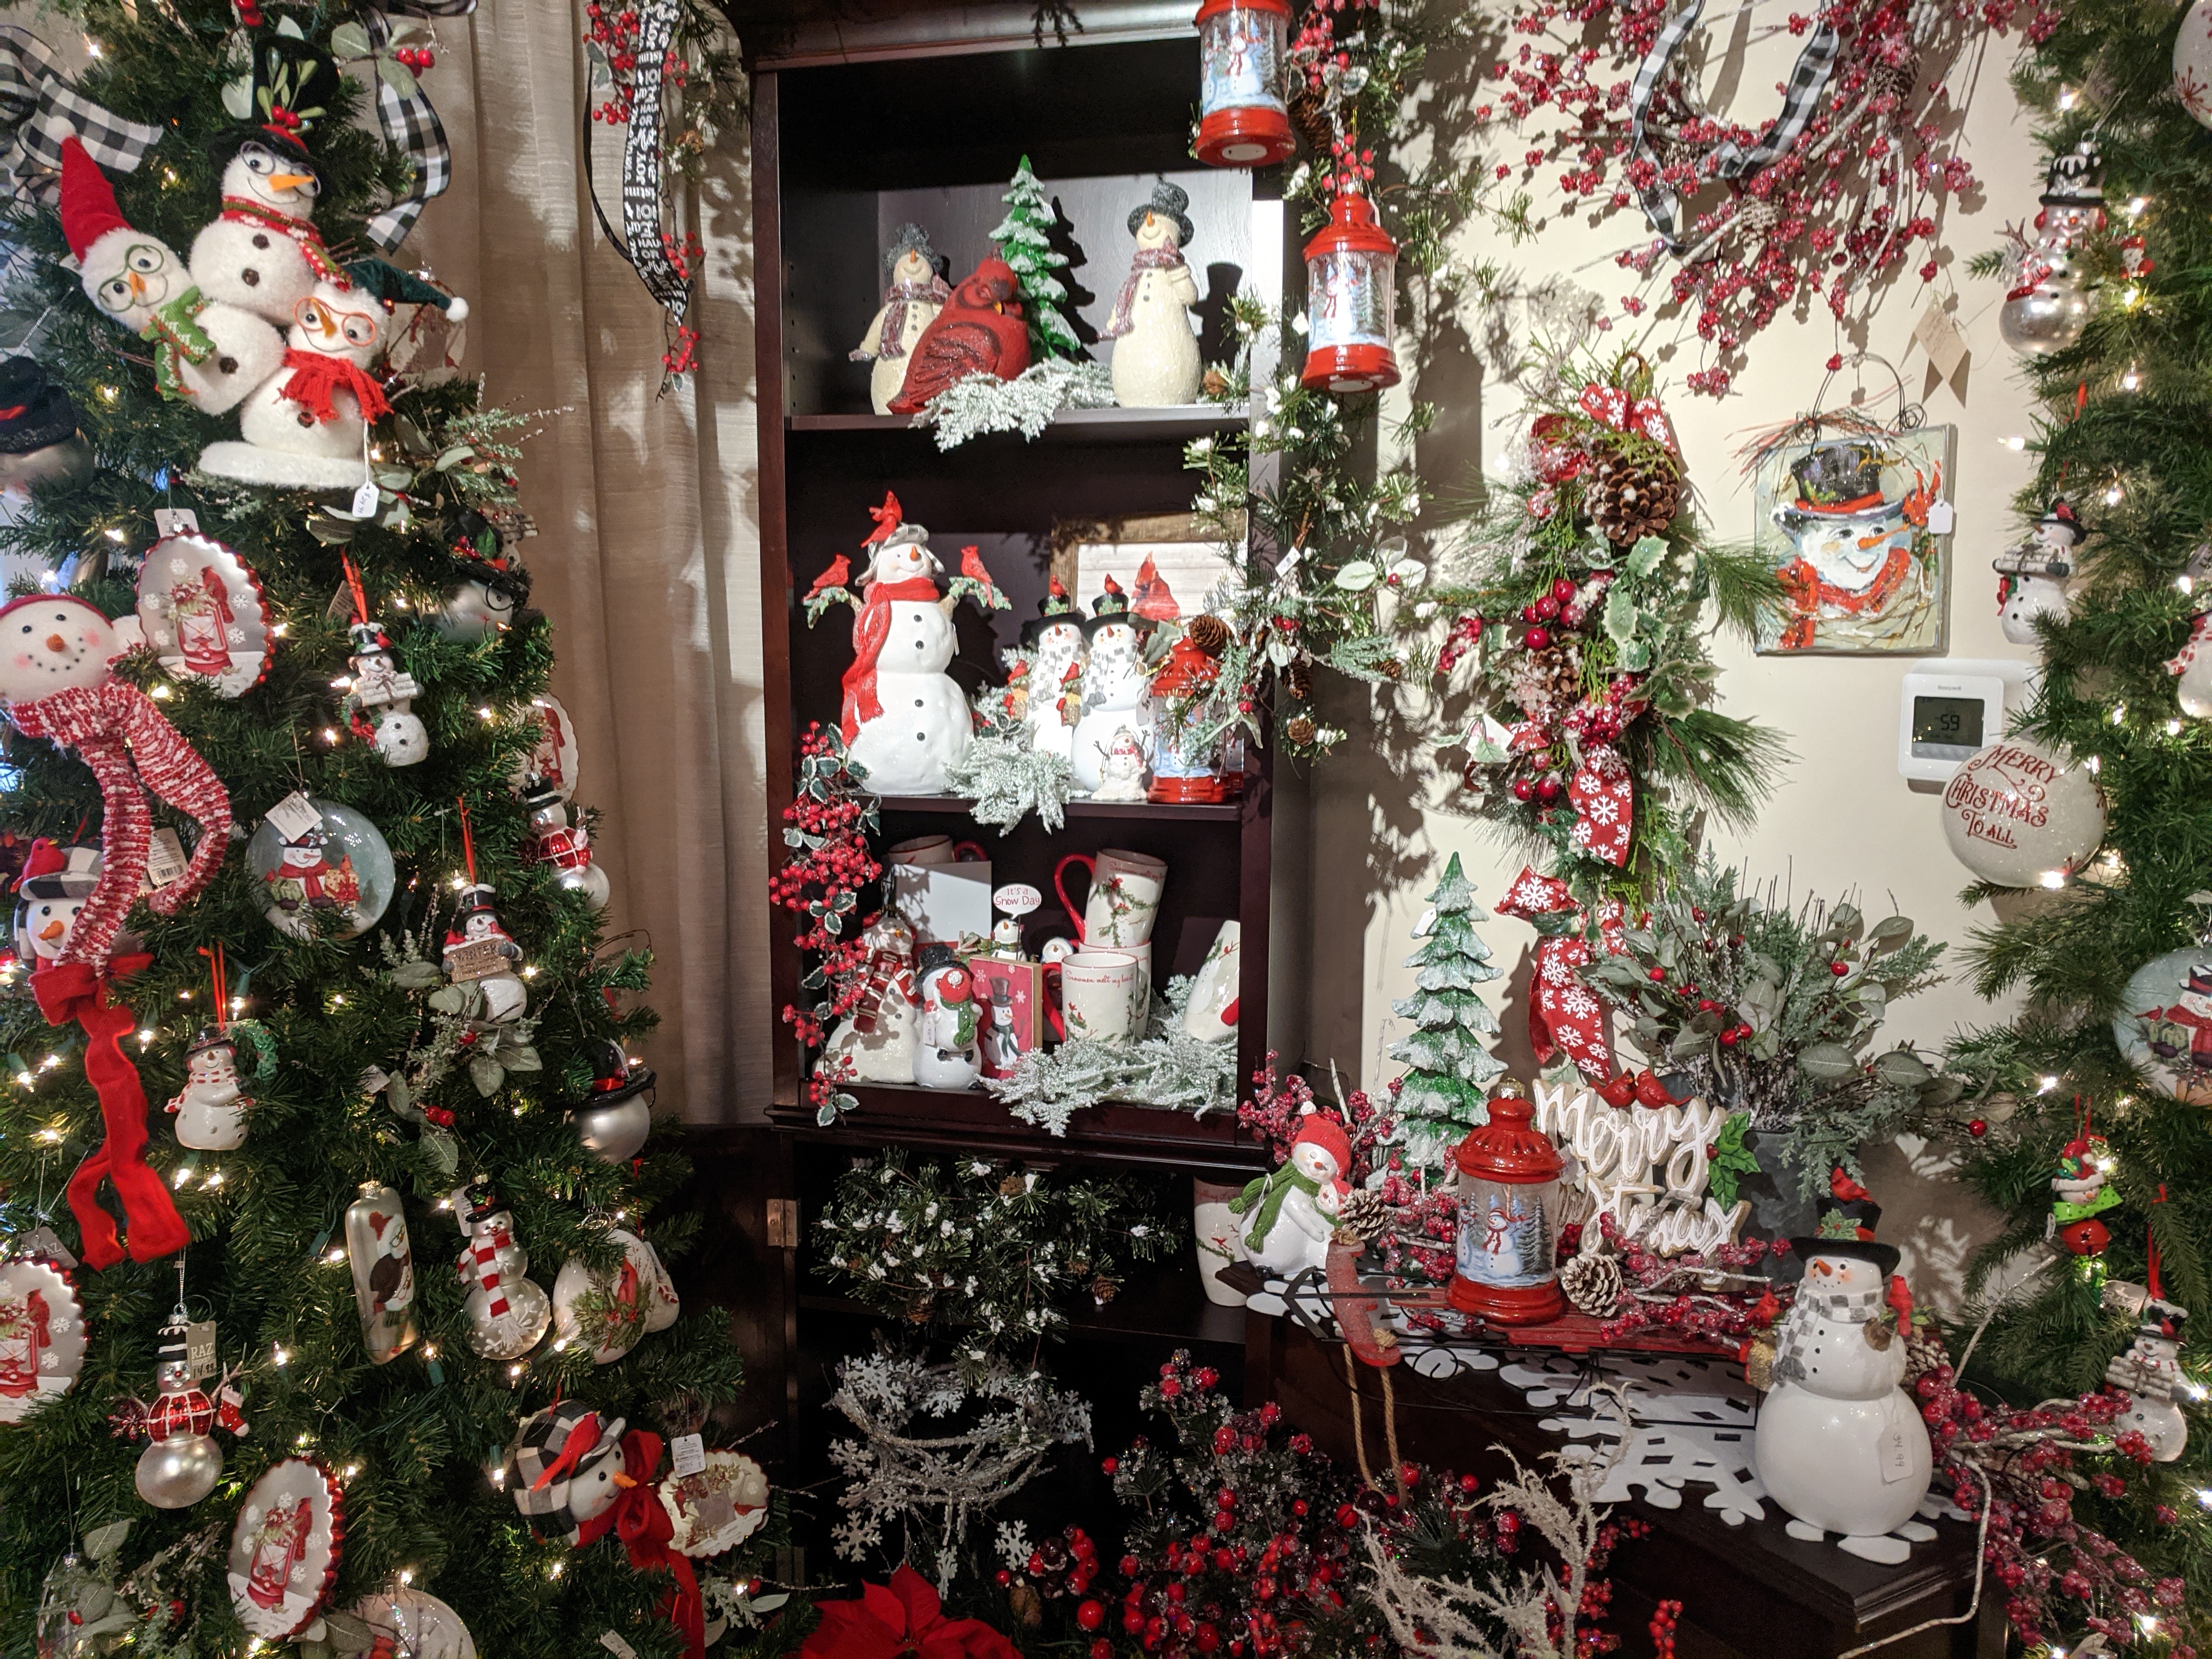 Christmas Shoppe